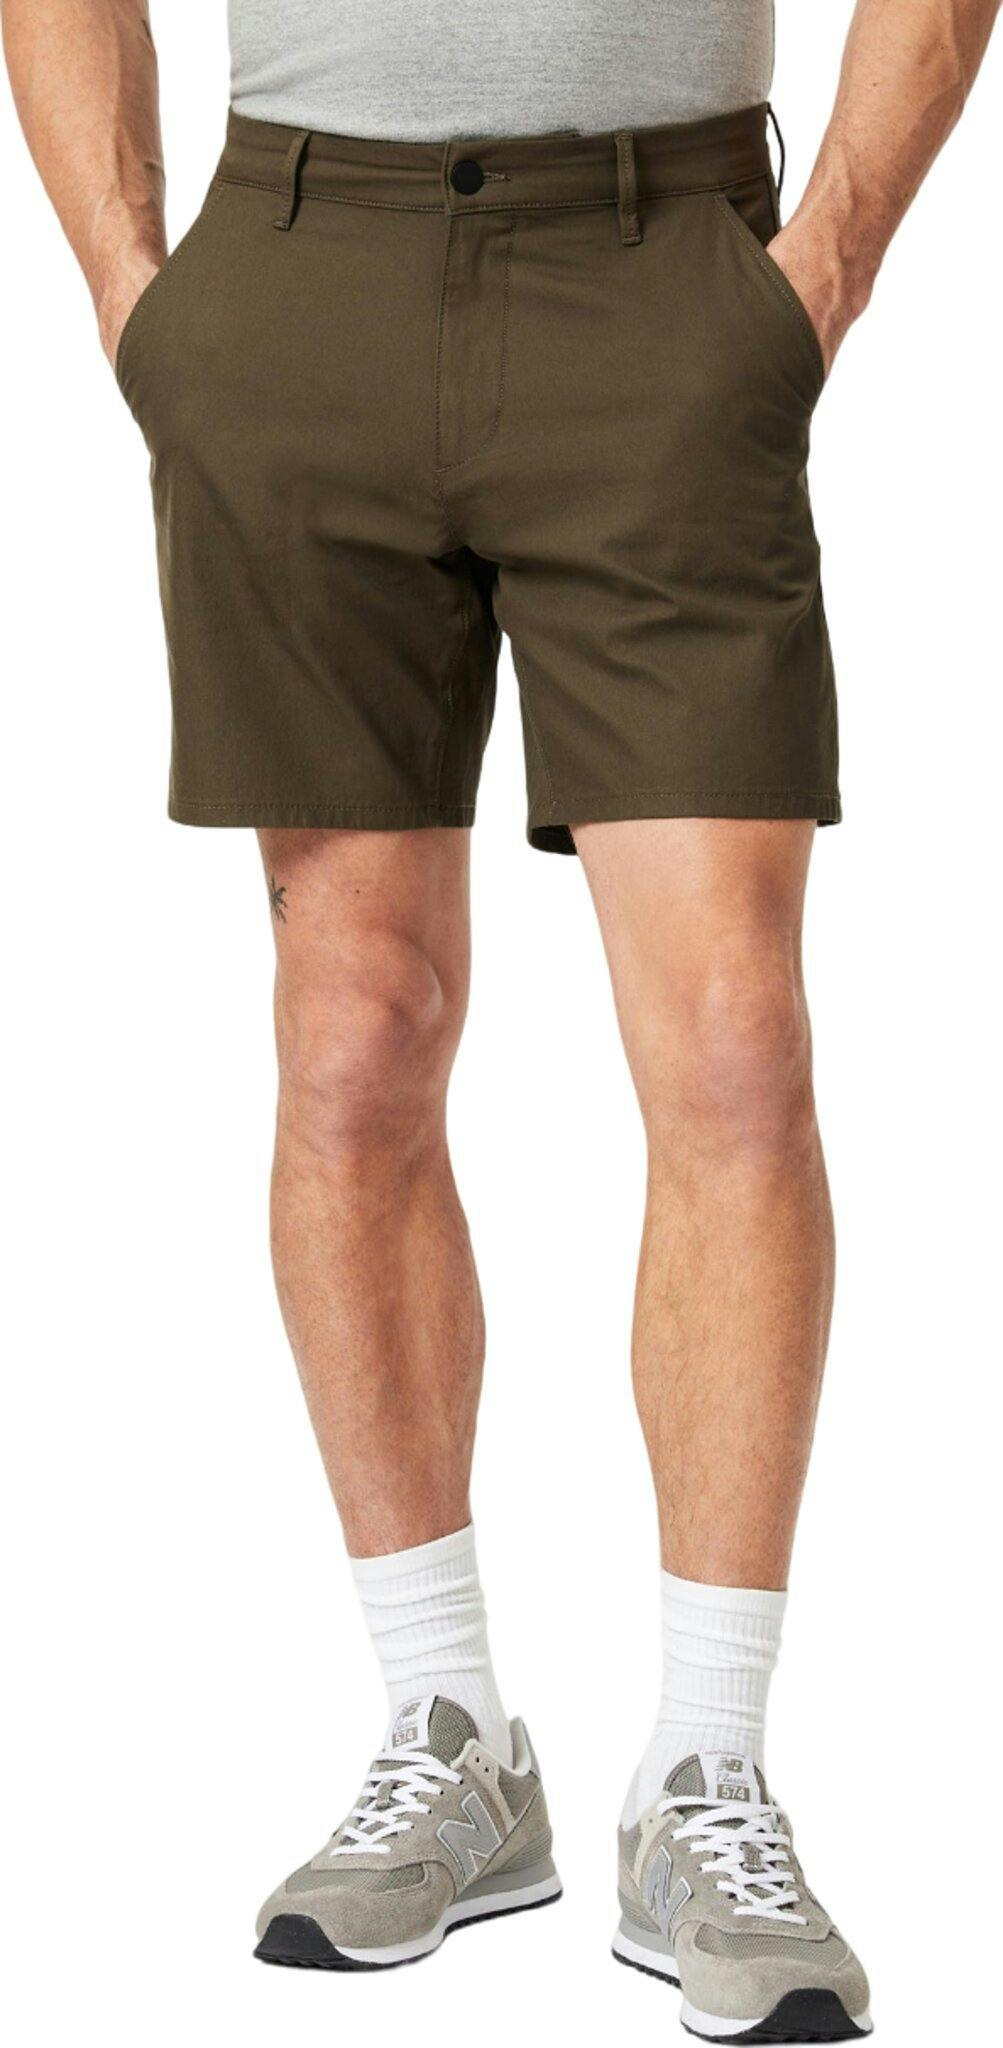 Product image for Darren Shorts 7.5" - Men's